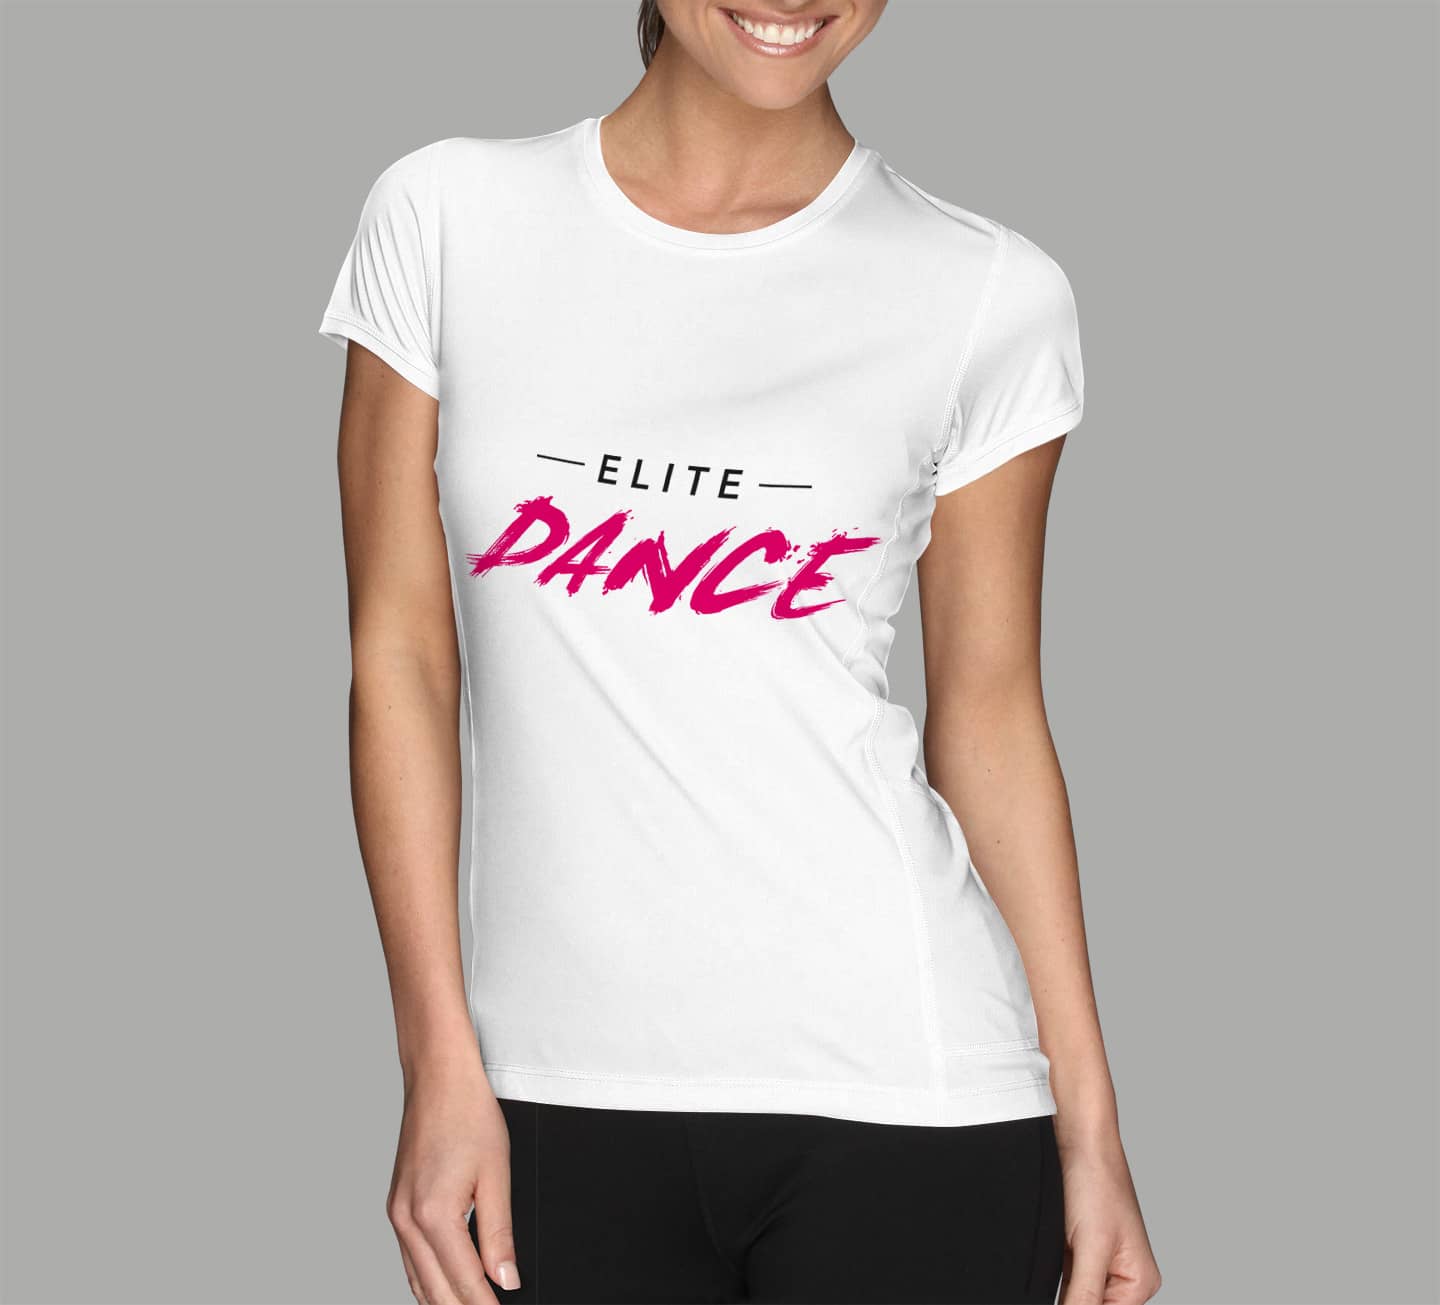 EliteDance-Shirt